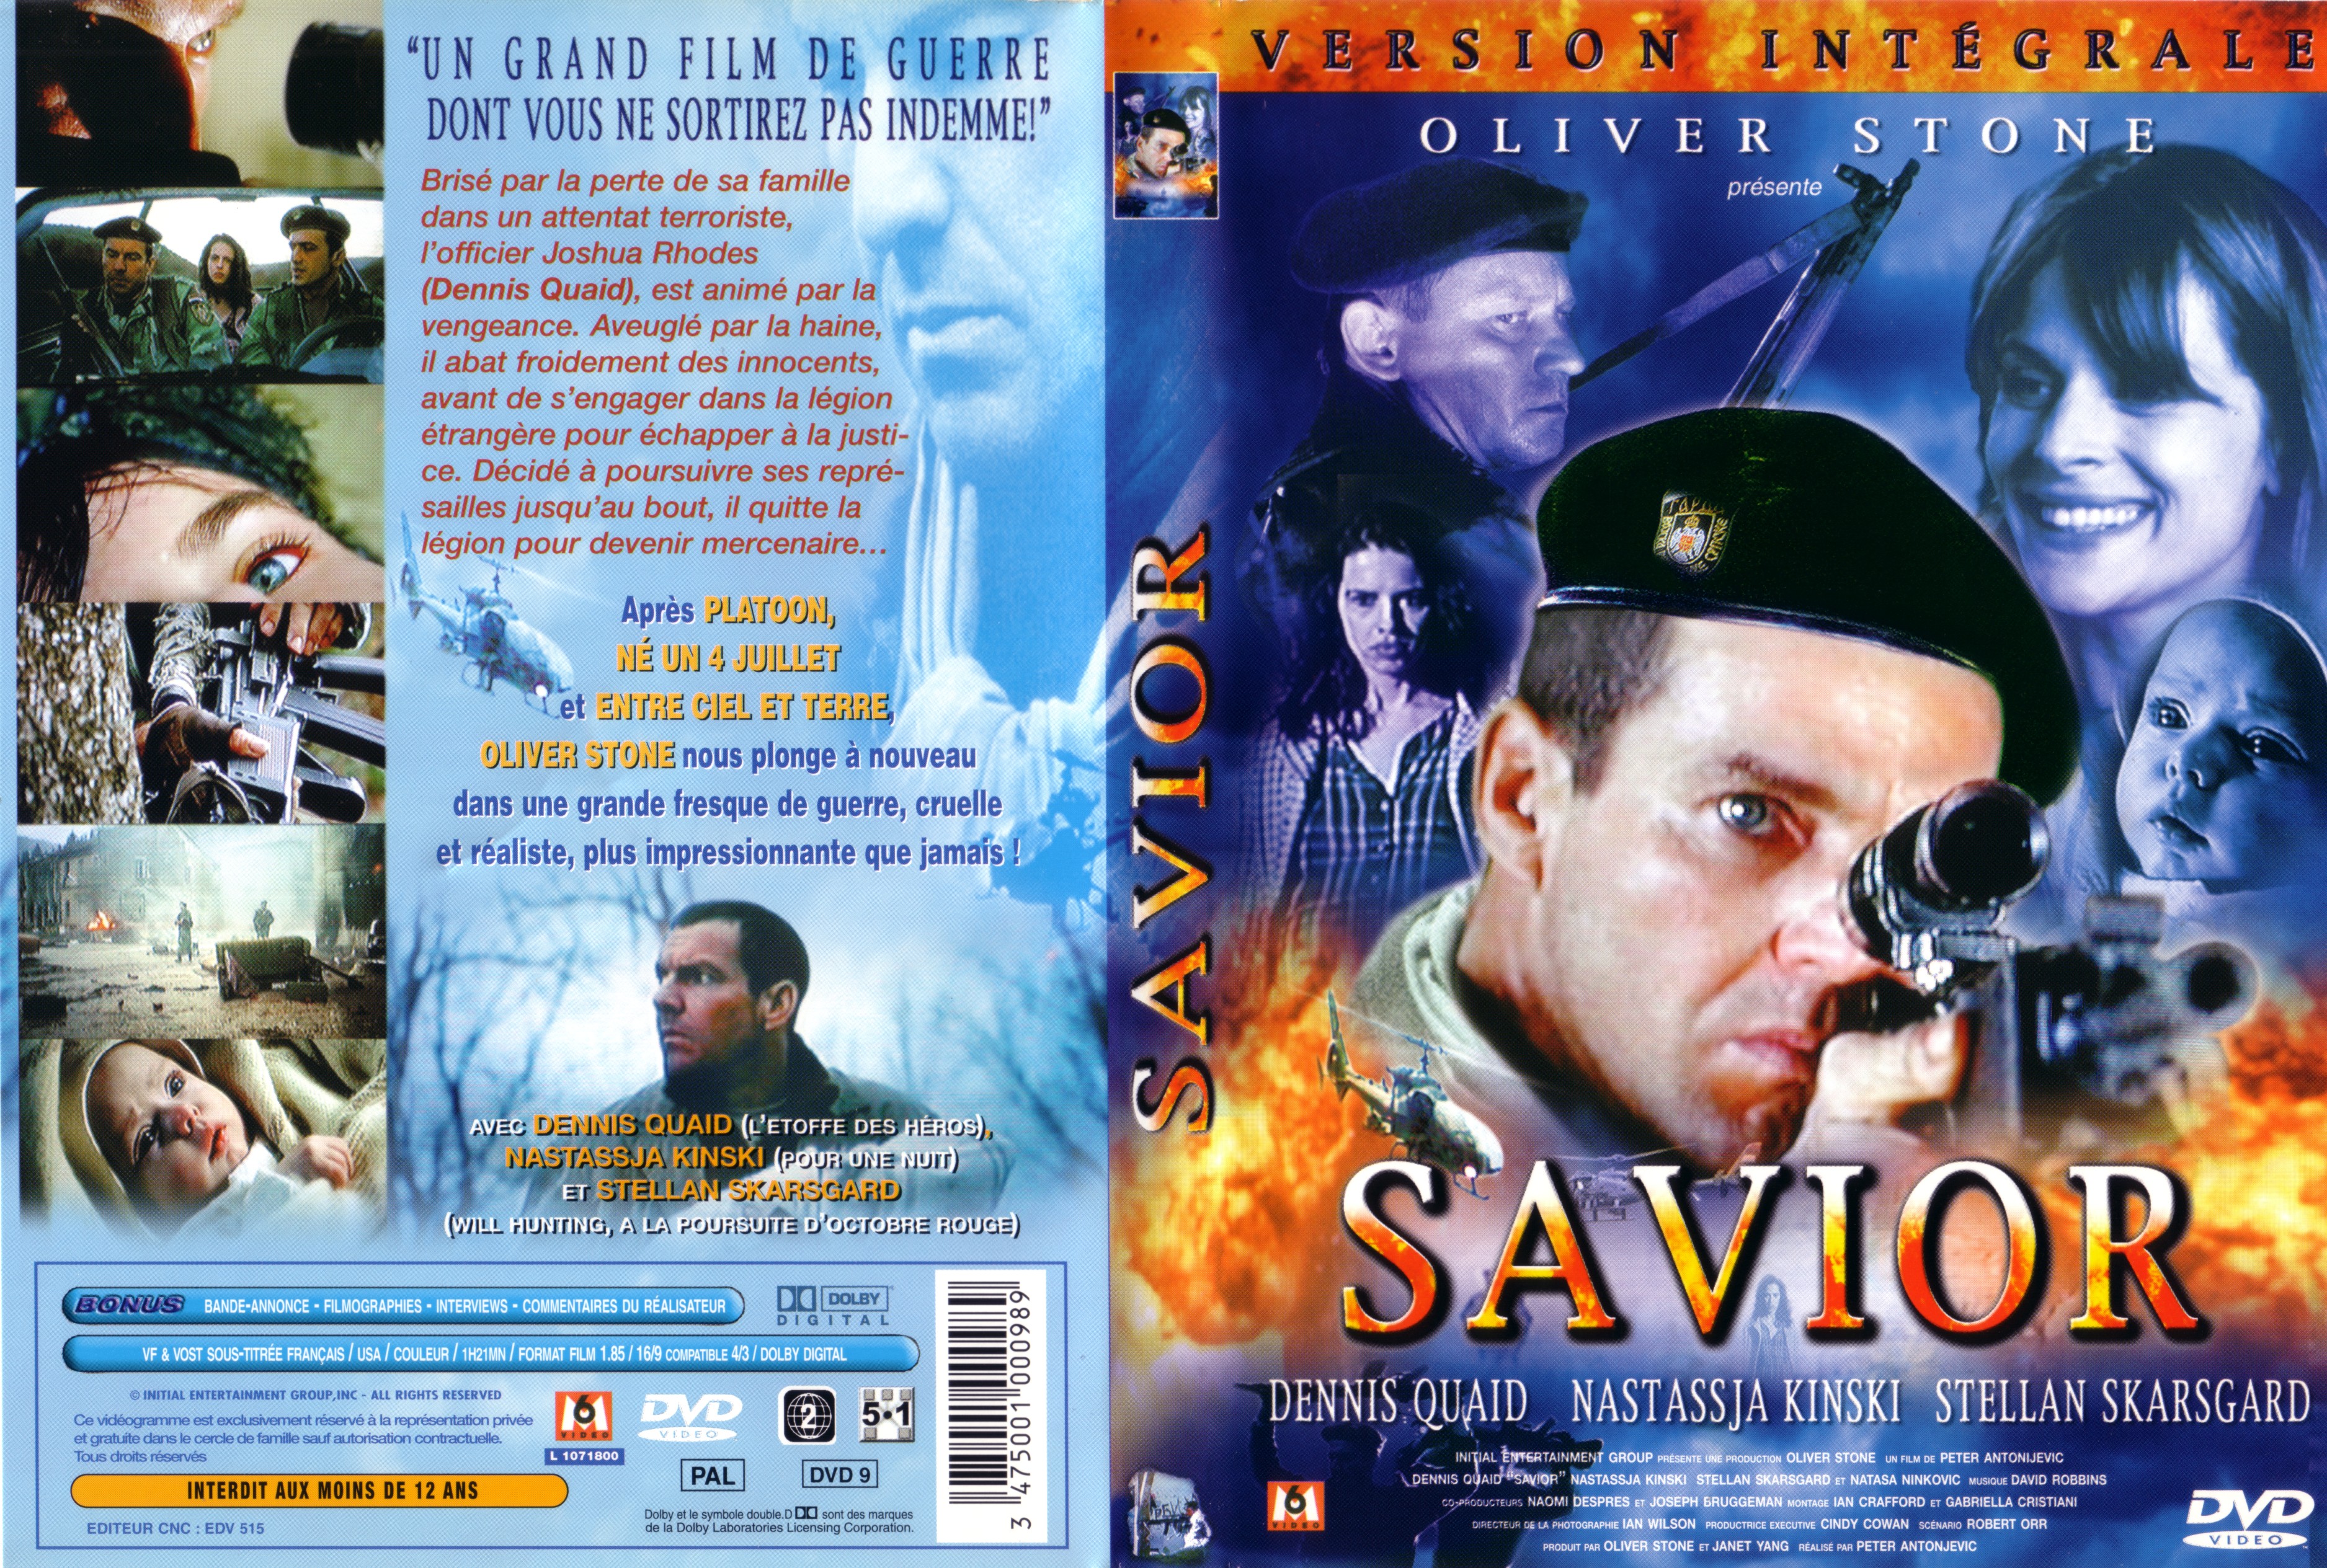 Jaquette DVD Savior v2